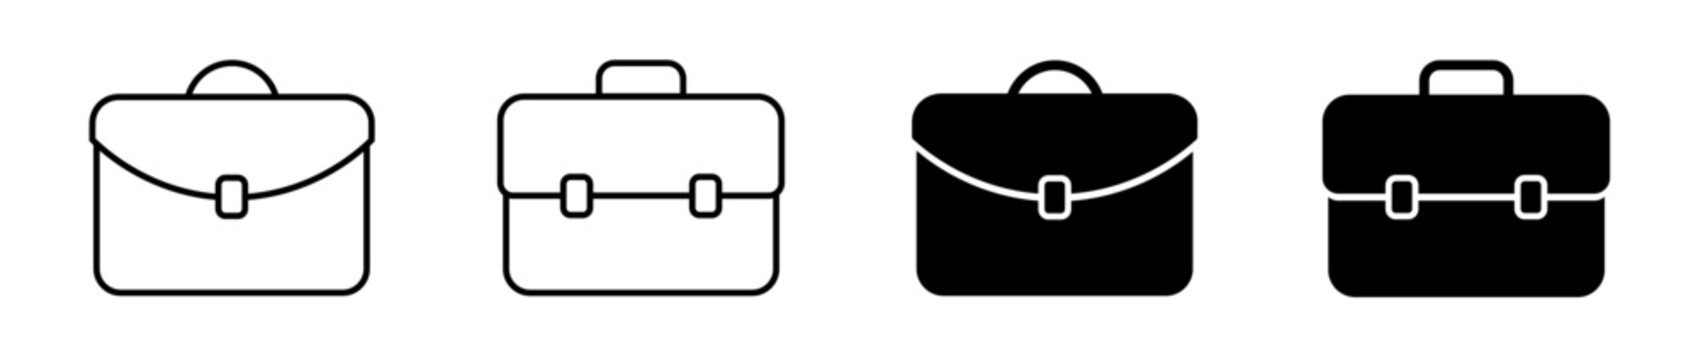 Briefcase icon set. Business bag, portfolio symbol. Editable stroke. Vector illustration. 